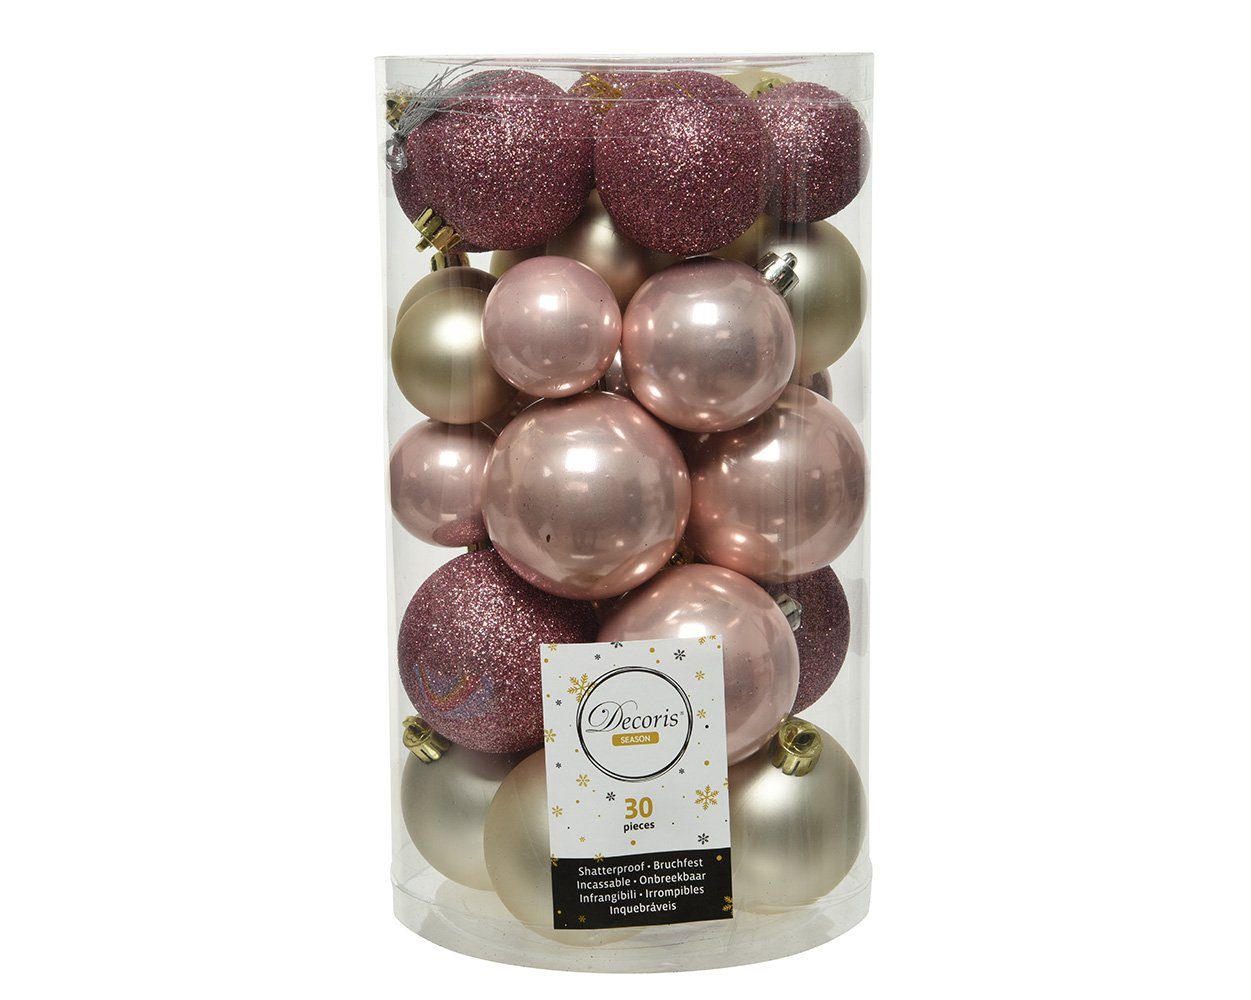 / Kunststoff Weihnachtskugeln rosa, Set Mix perle 30er 4-6cm Weihnachtsbaumkugel, season Decoris decorations